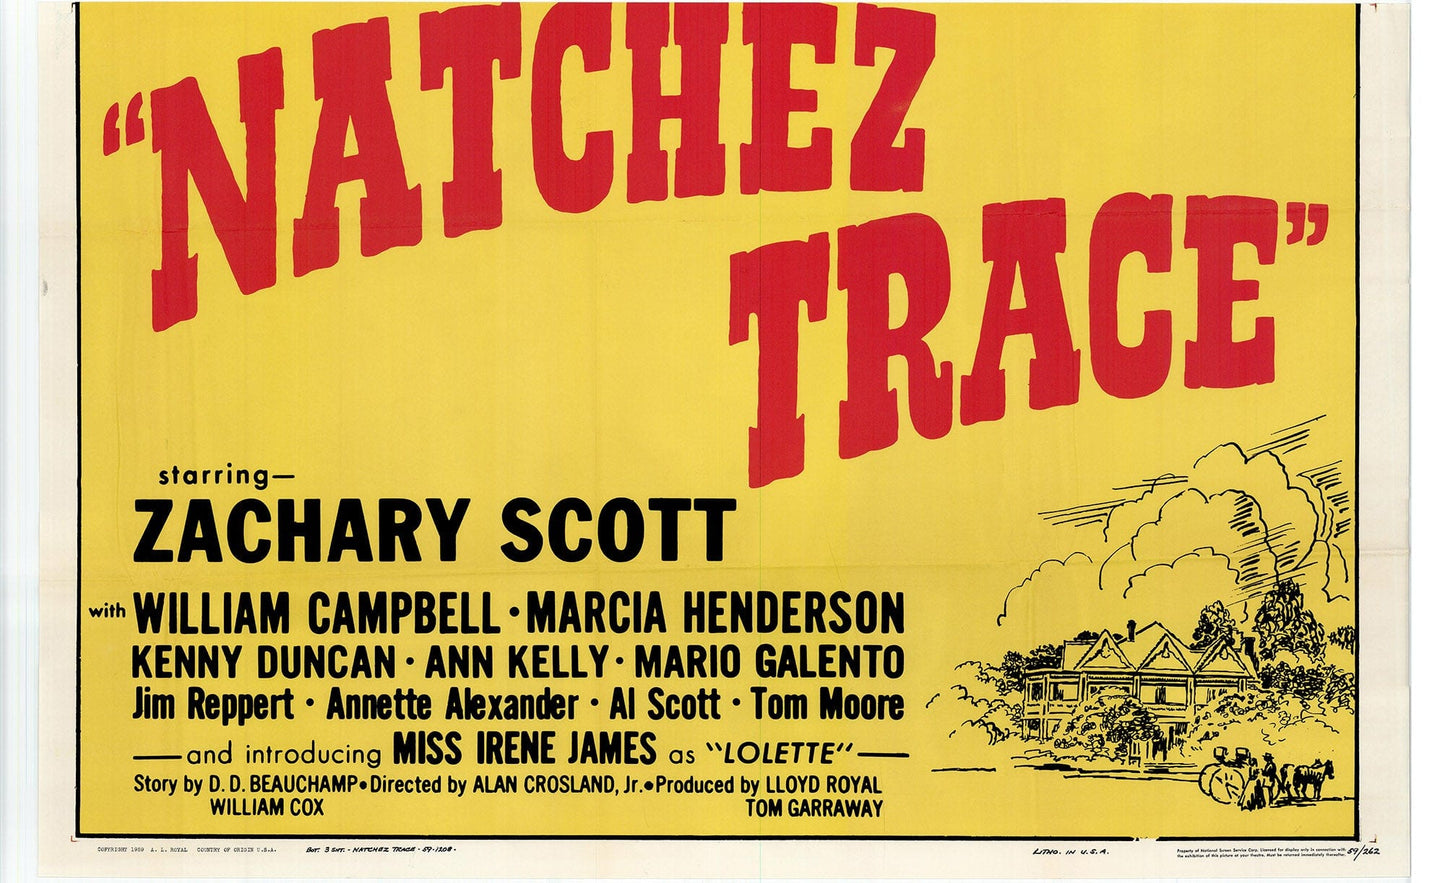 Natchez Trace - Classic 2 Panel Movie Poster